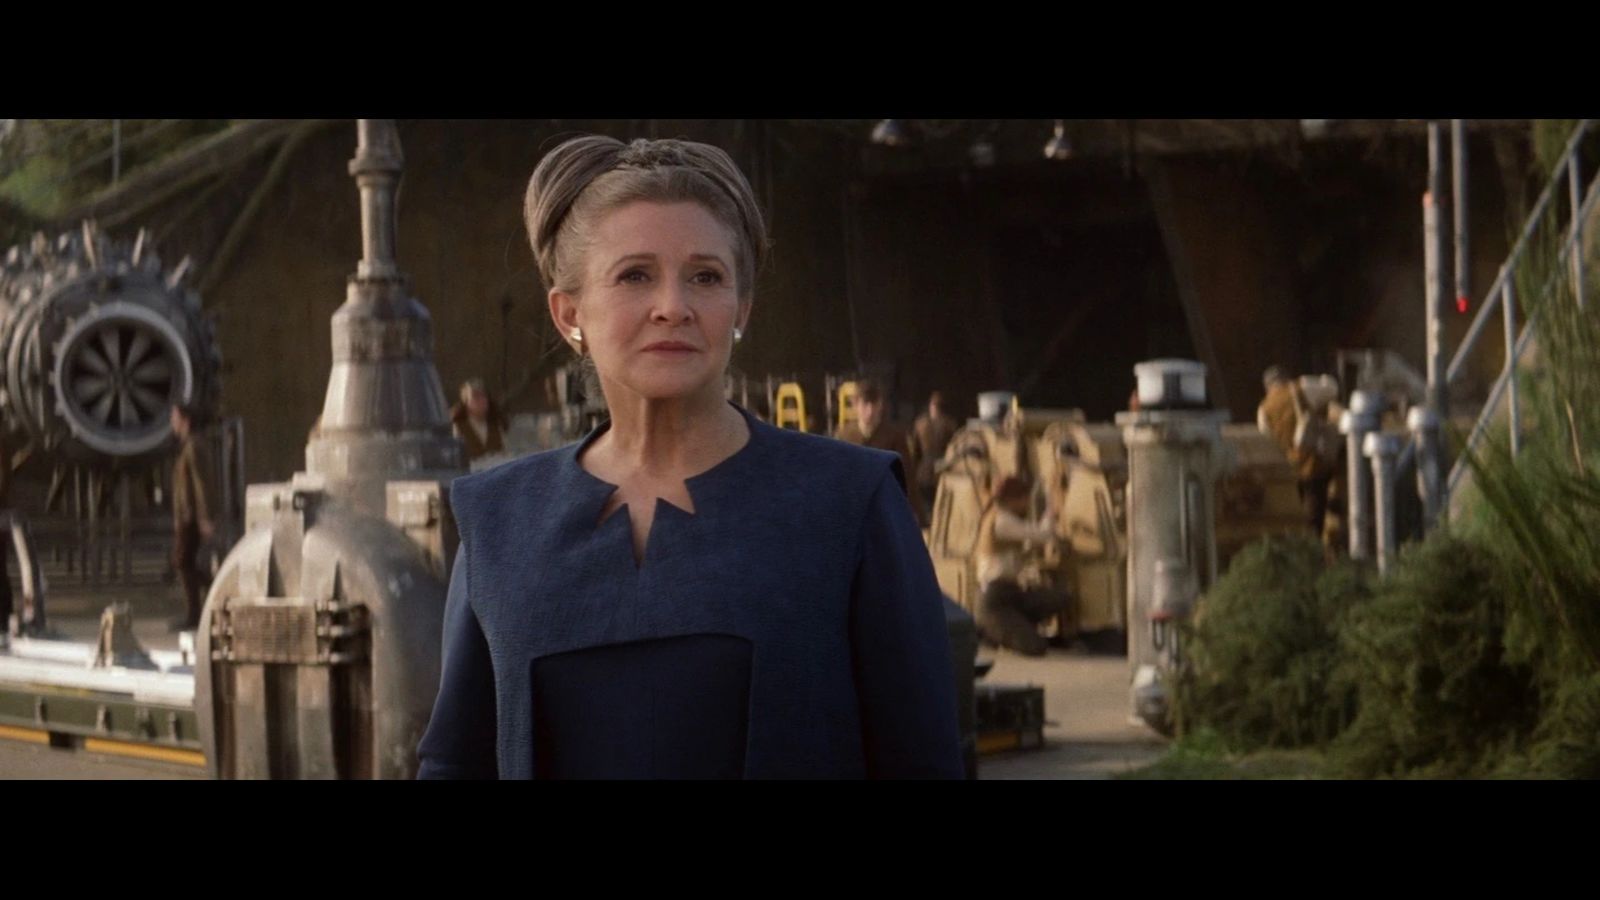 Carrie Fischer as General Leia Organa